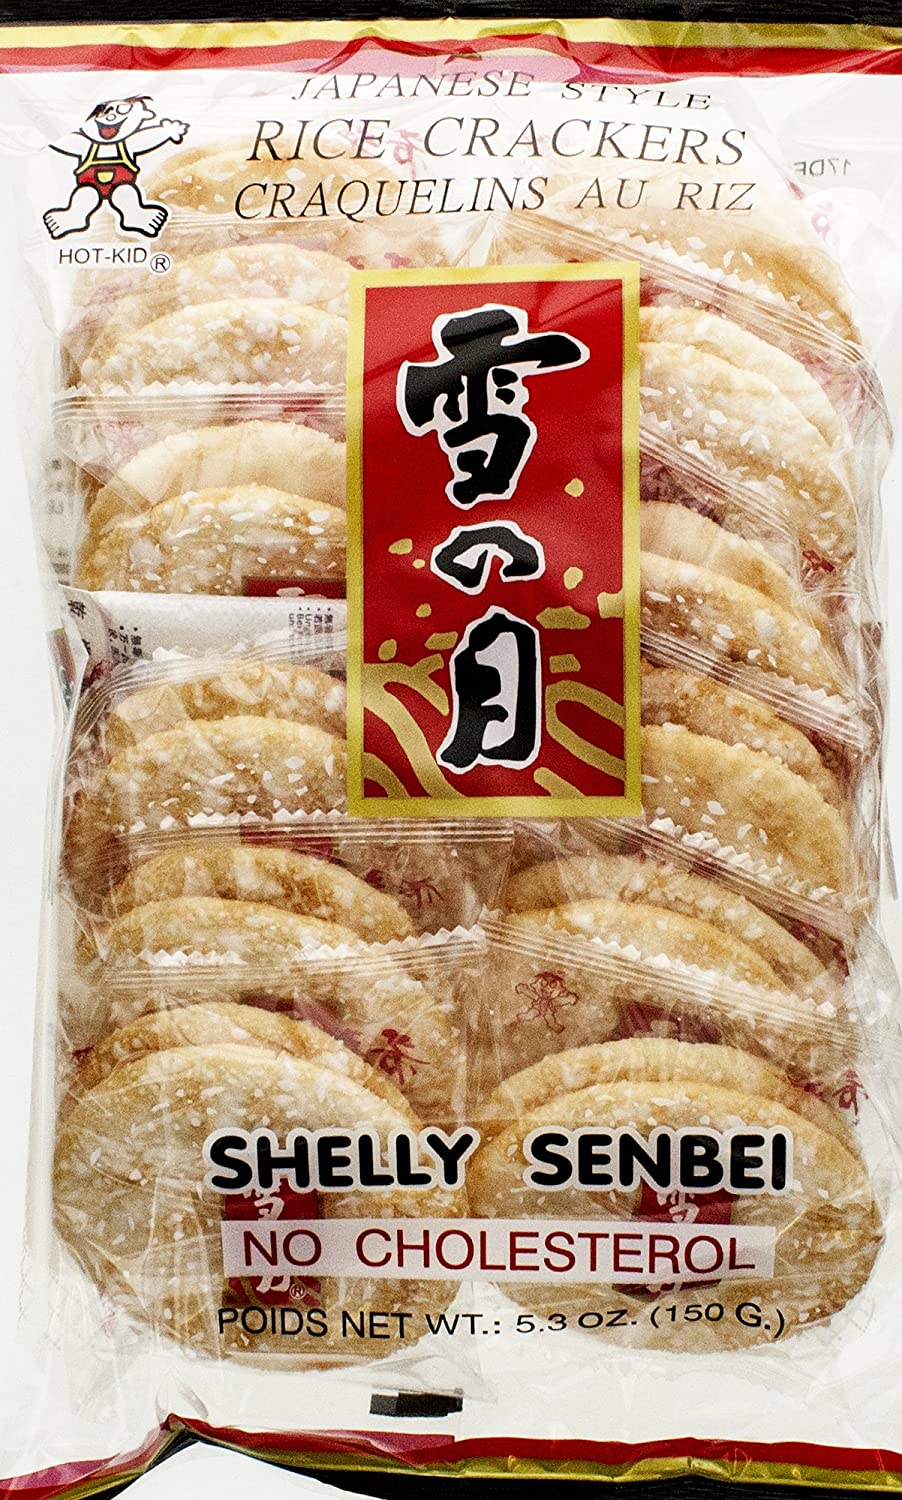 Hot-Kid Shelly Senbei Rice Crackers